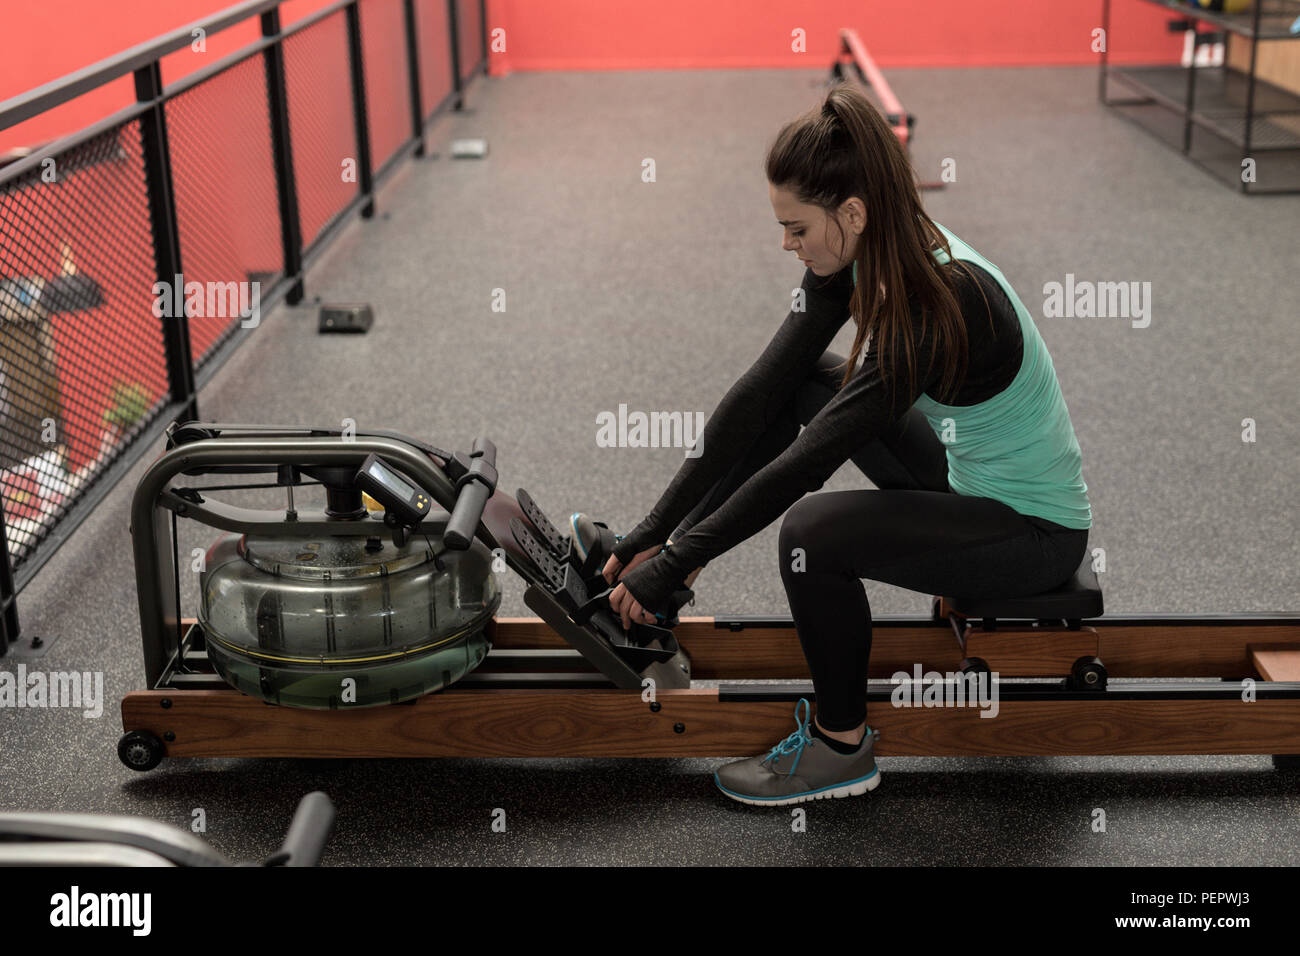 Woman using rowing machine in fitness studio Stock Photo